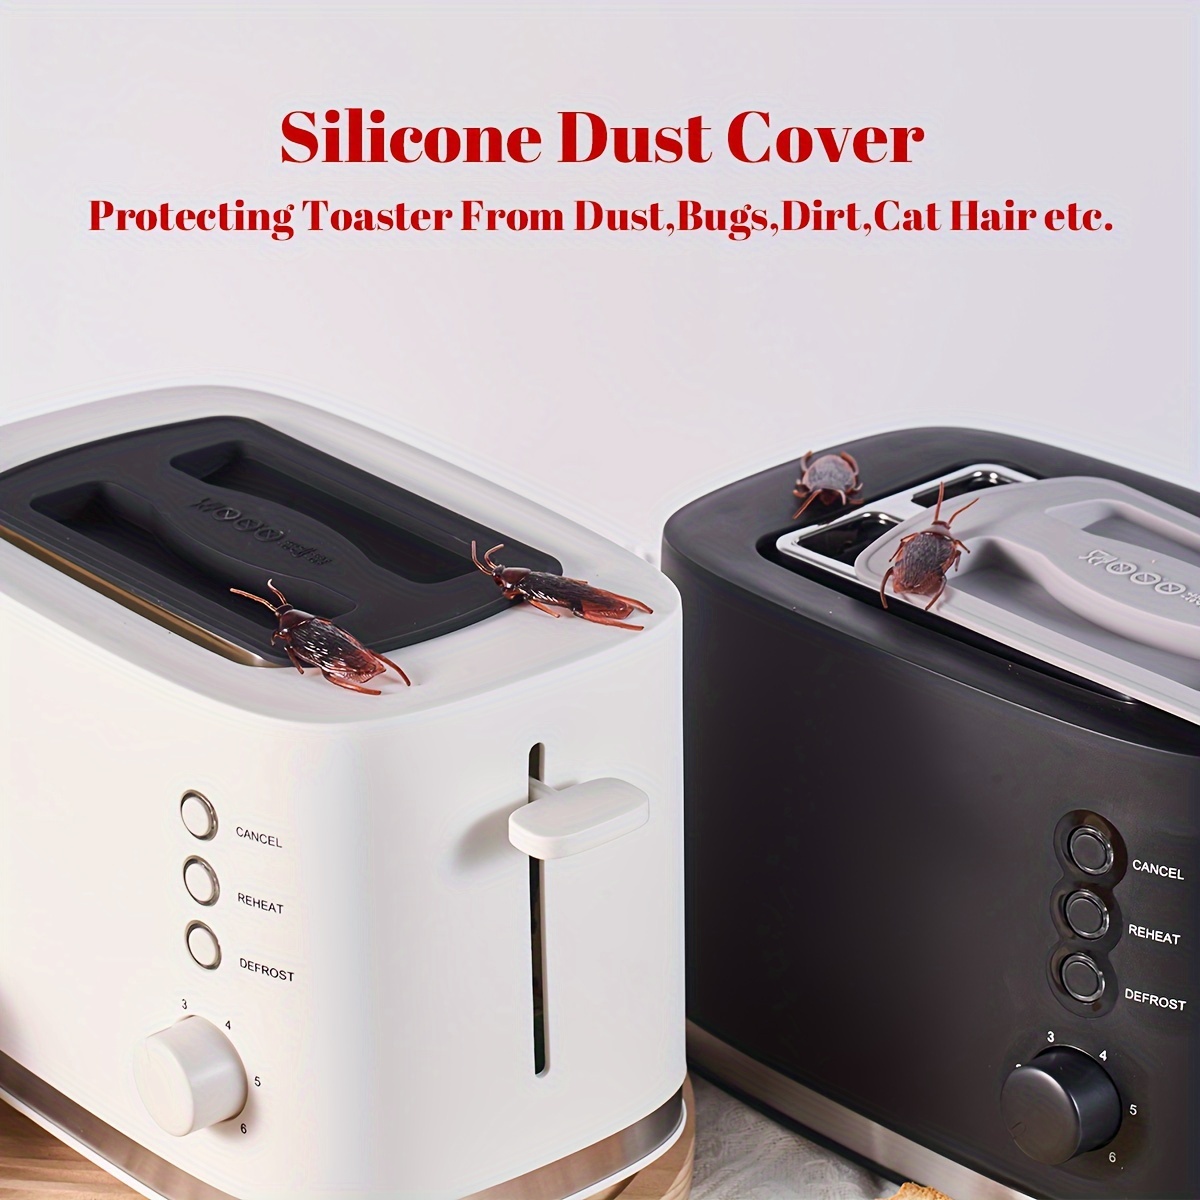 Dustproof Dust Cover For 2 Toaster Bpa Free Food - Temu